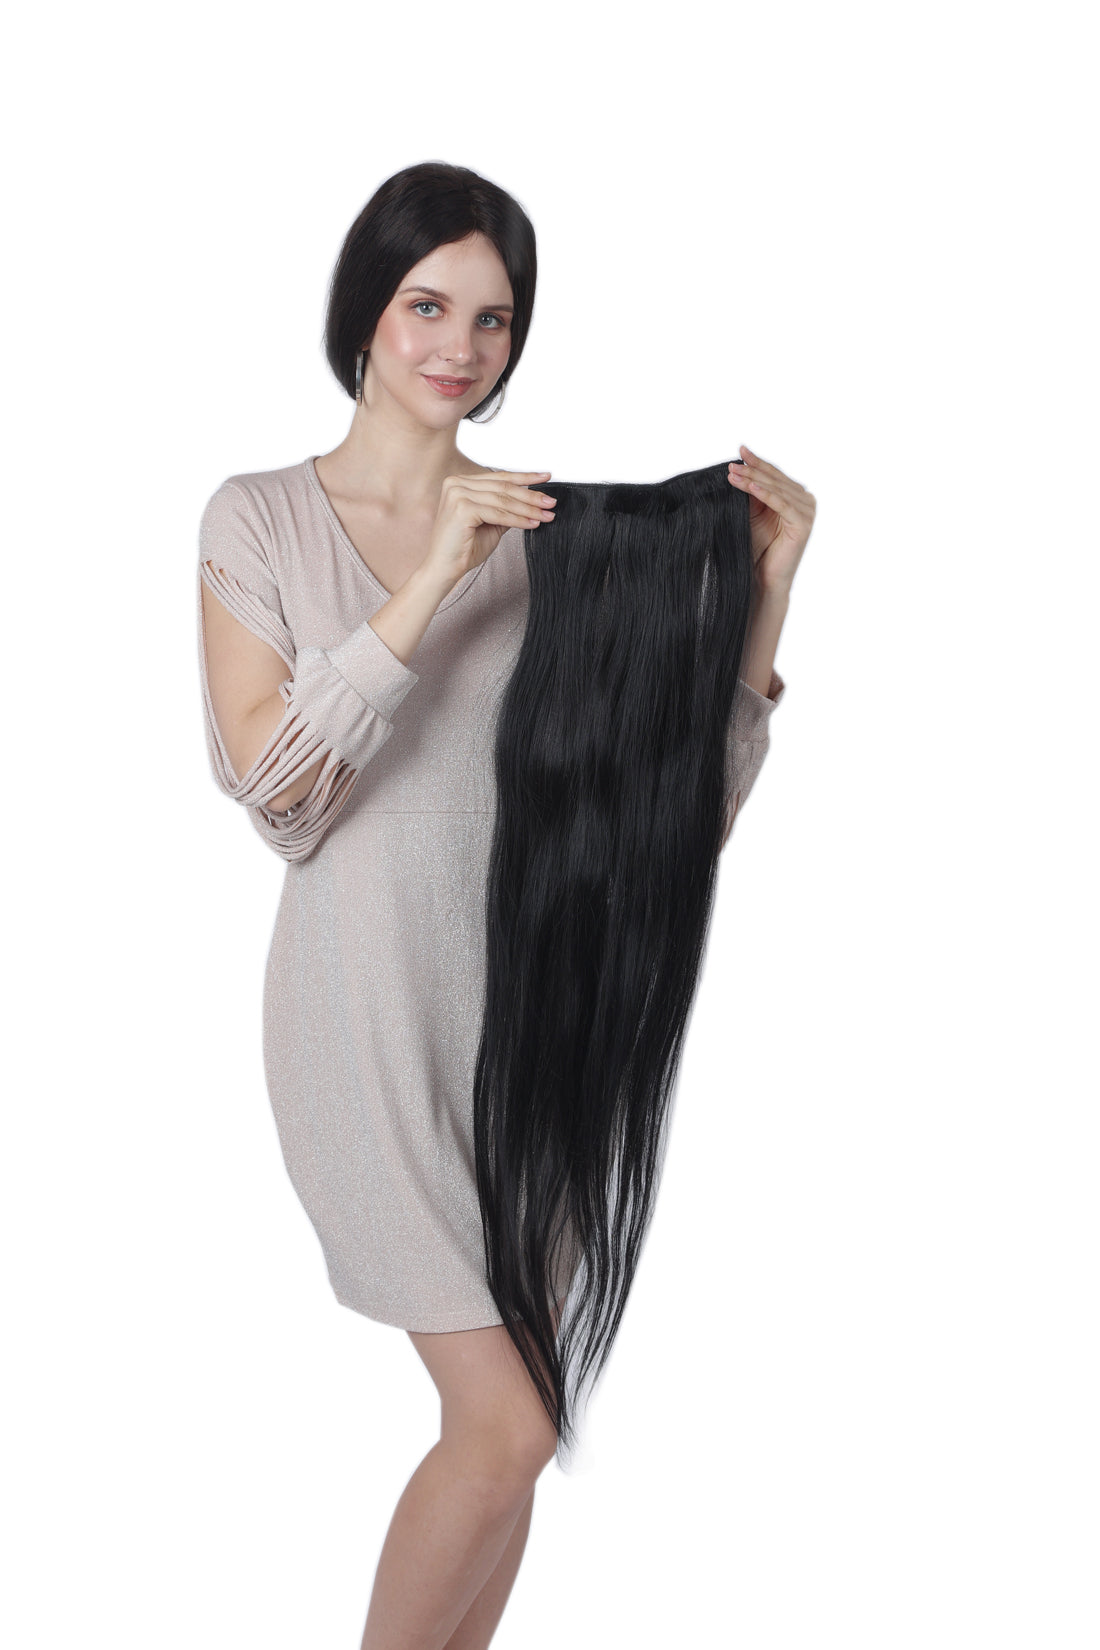 Premium 100% Indian Human Hair Extensions: Natural Black Straight Soft Hair Extensions Remi Virgin Hair